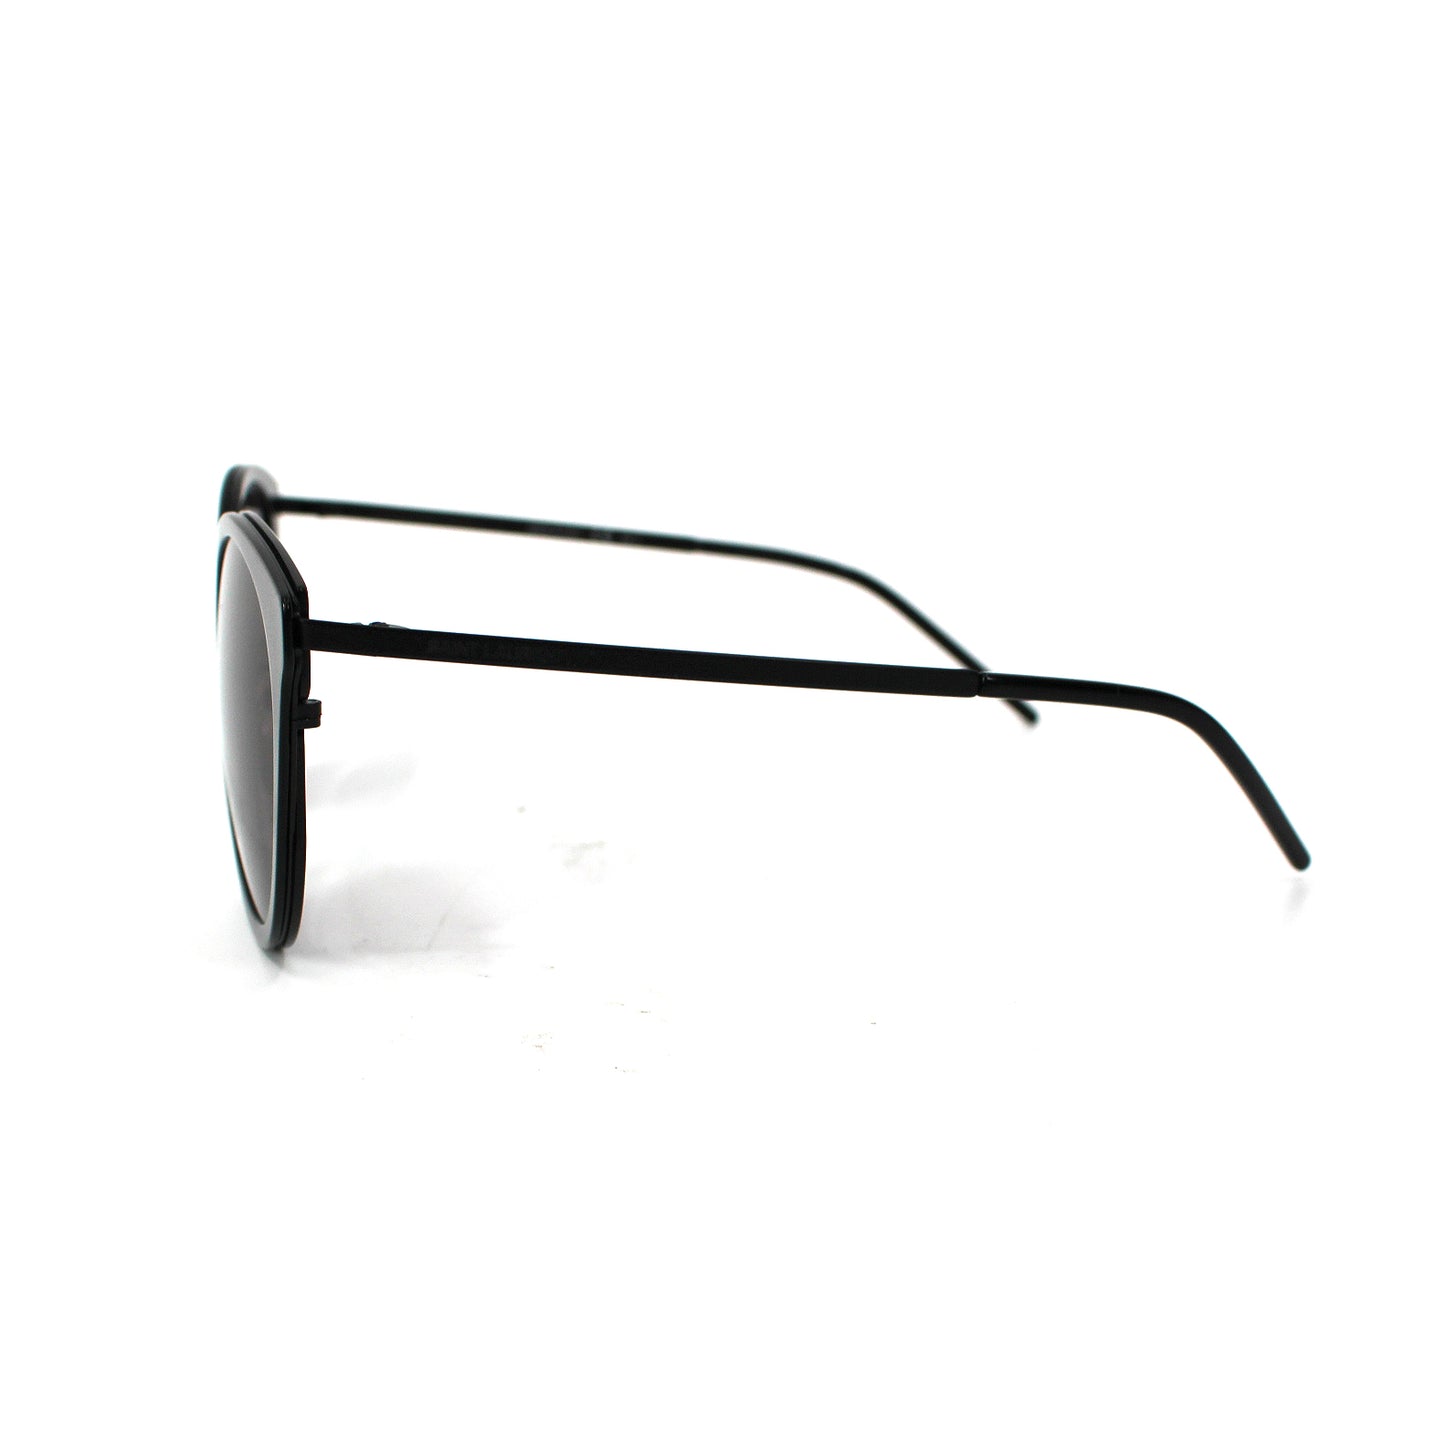 Saint Laurent Slim Sunglasses